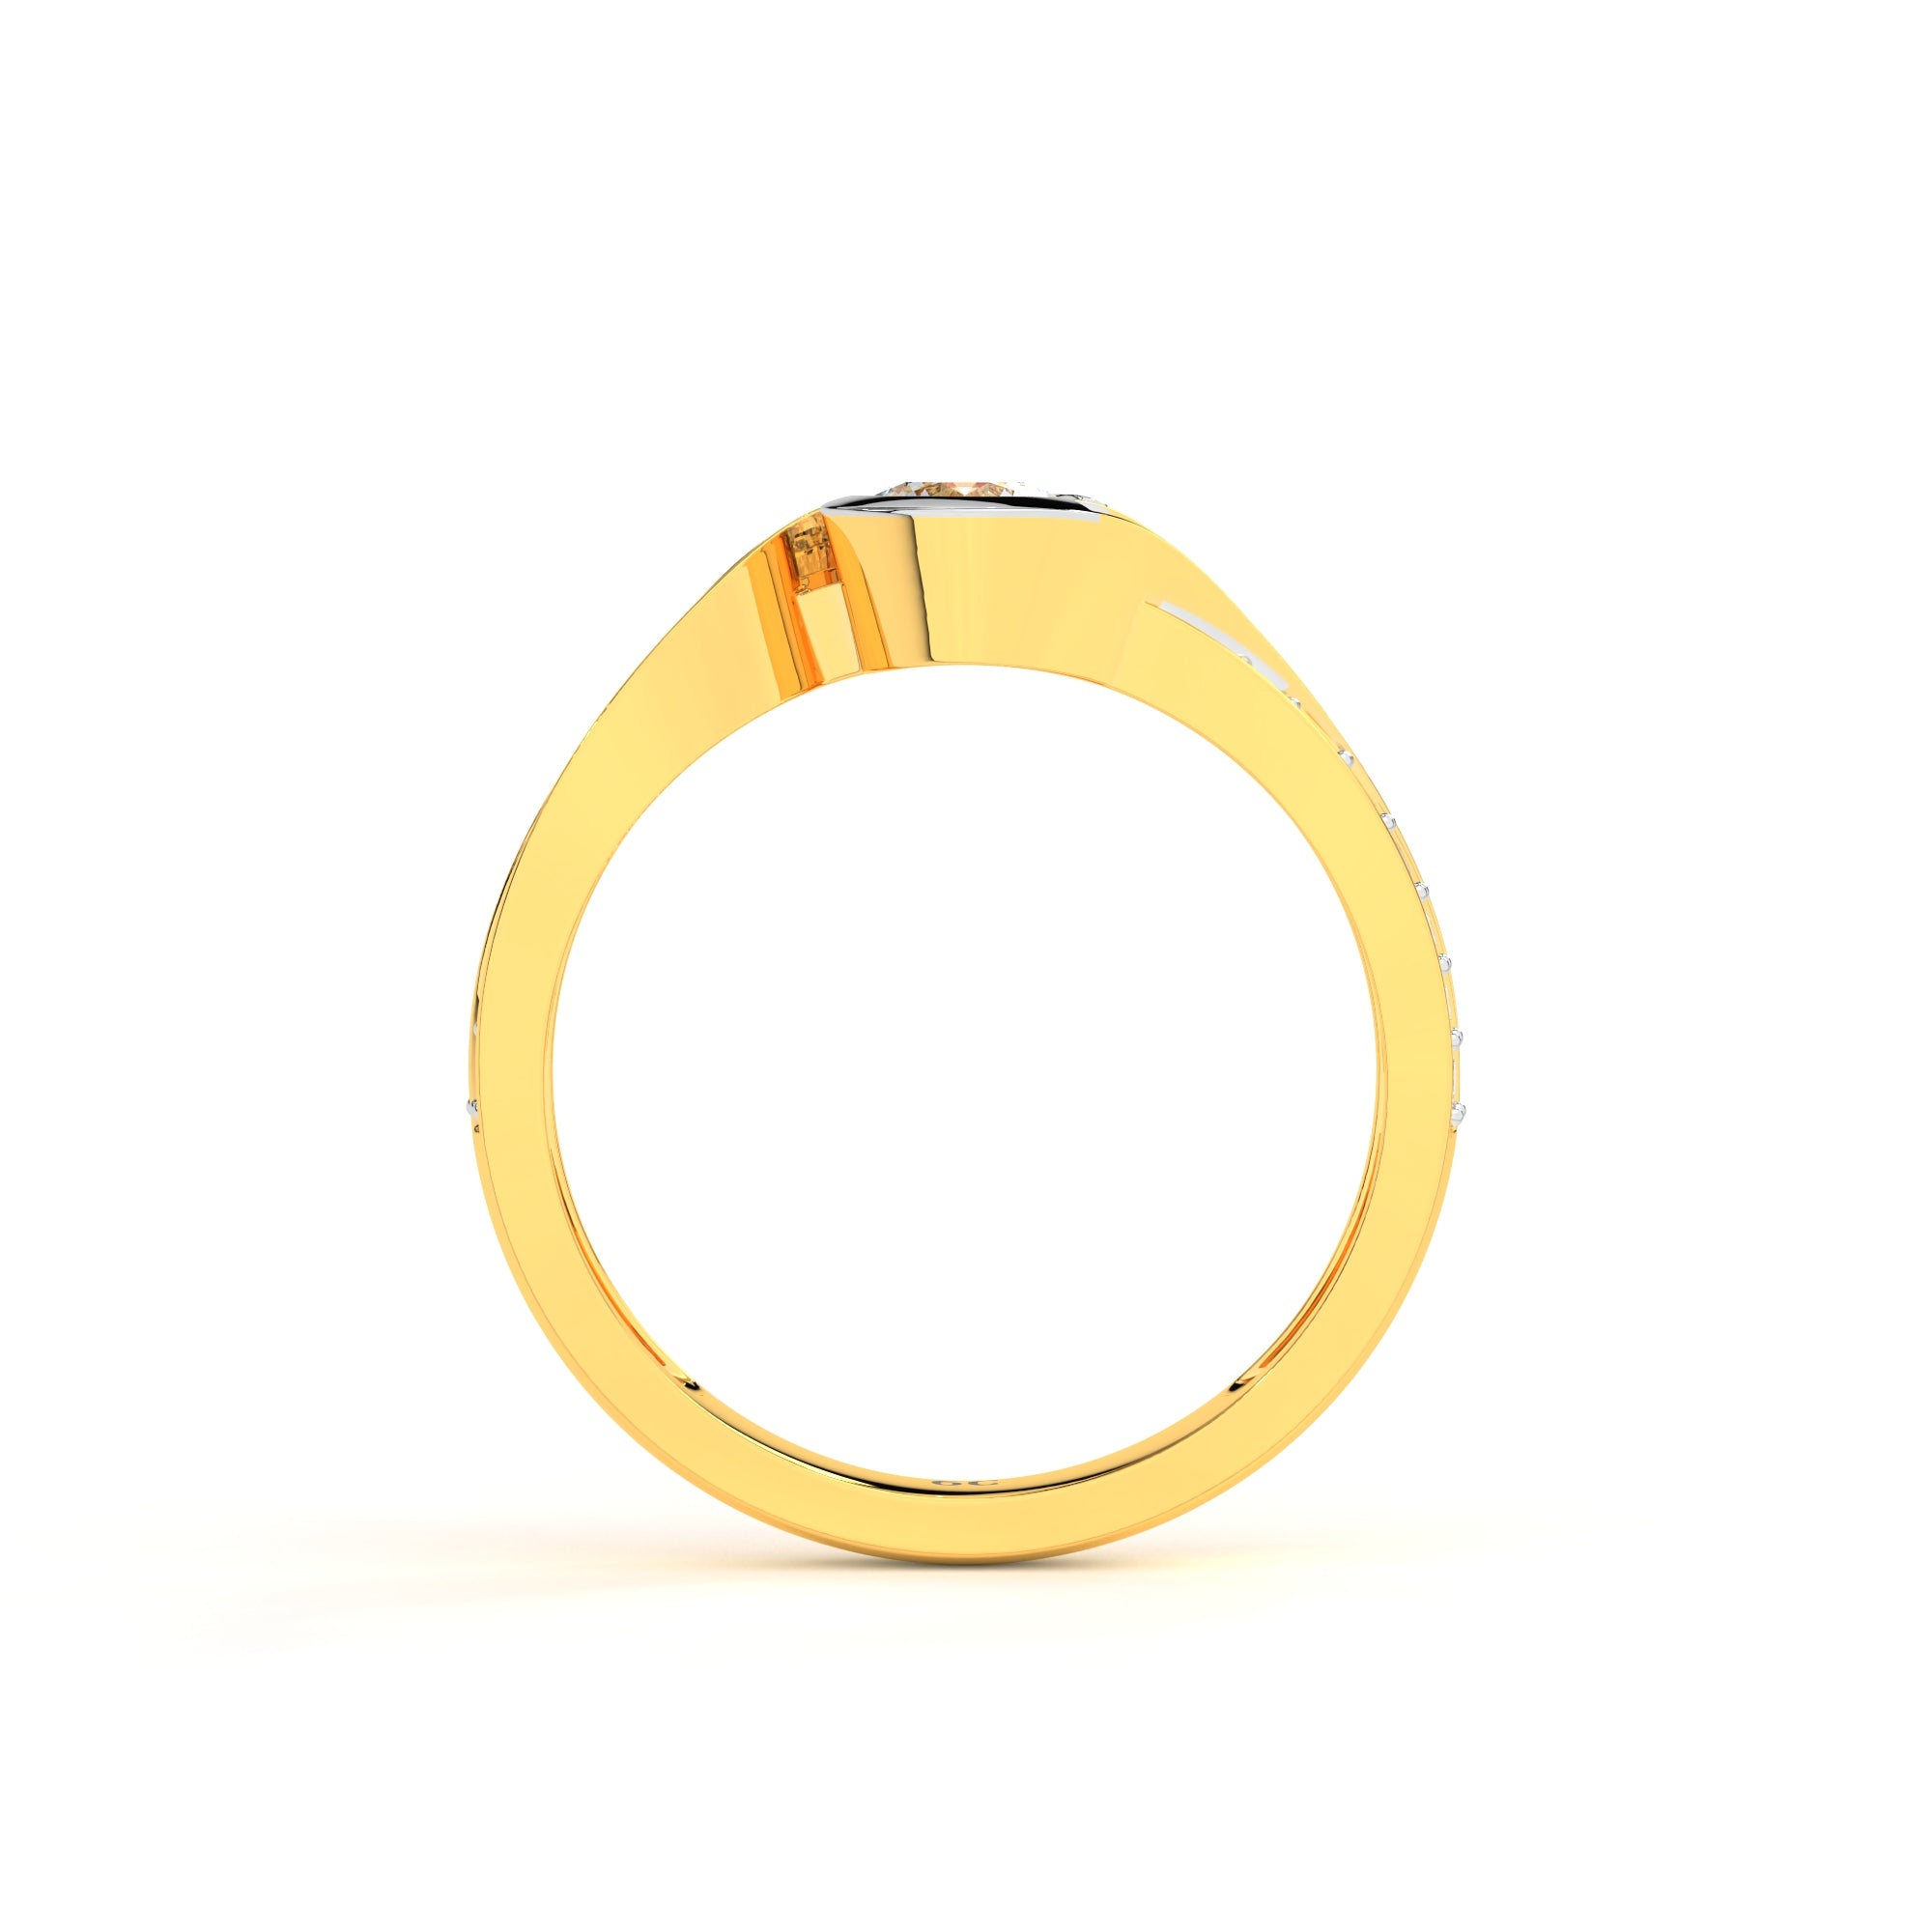 Sun-Kissed Diamond Ring